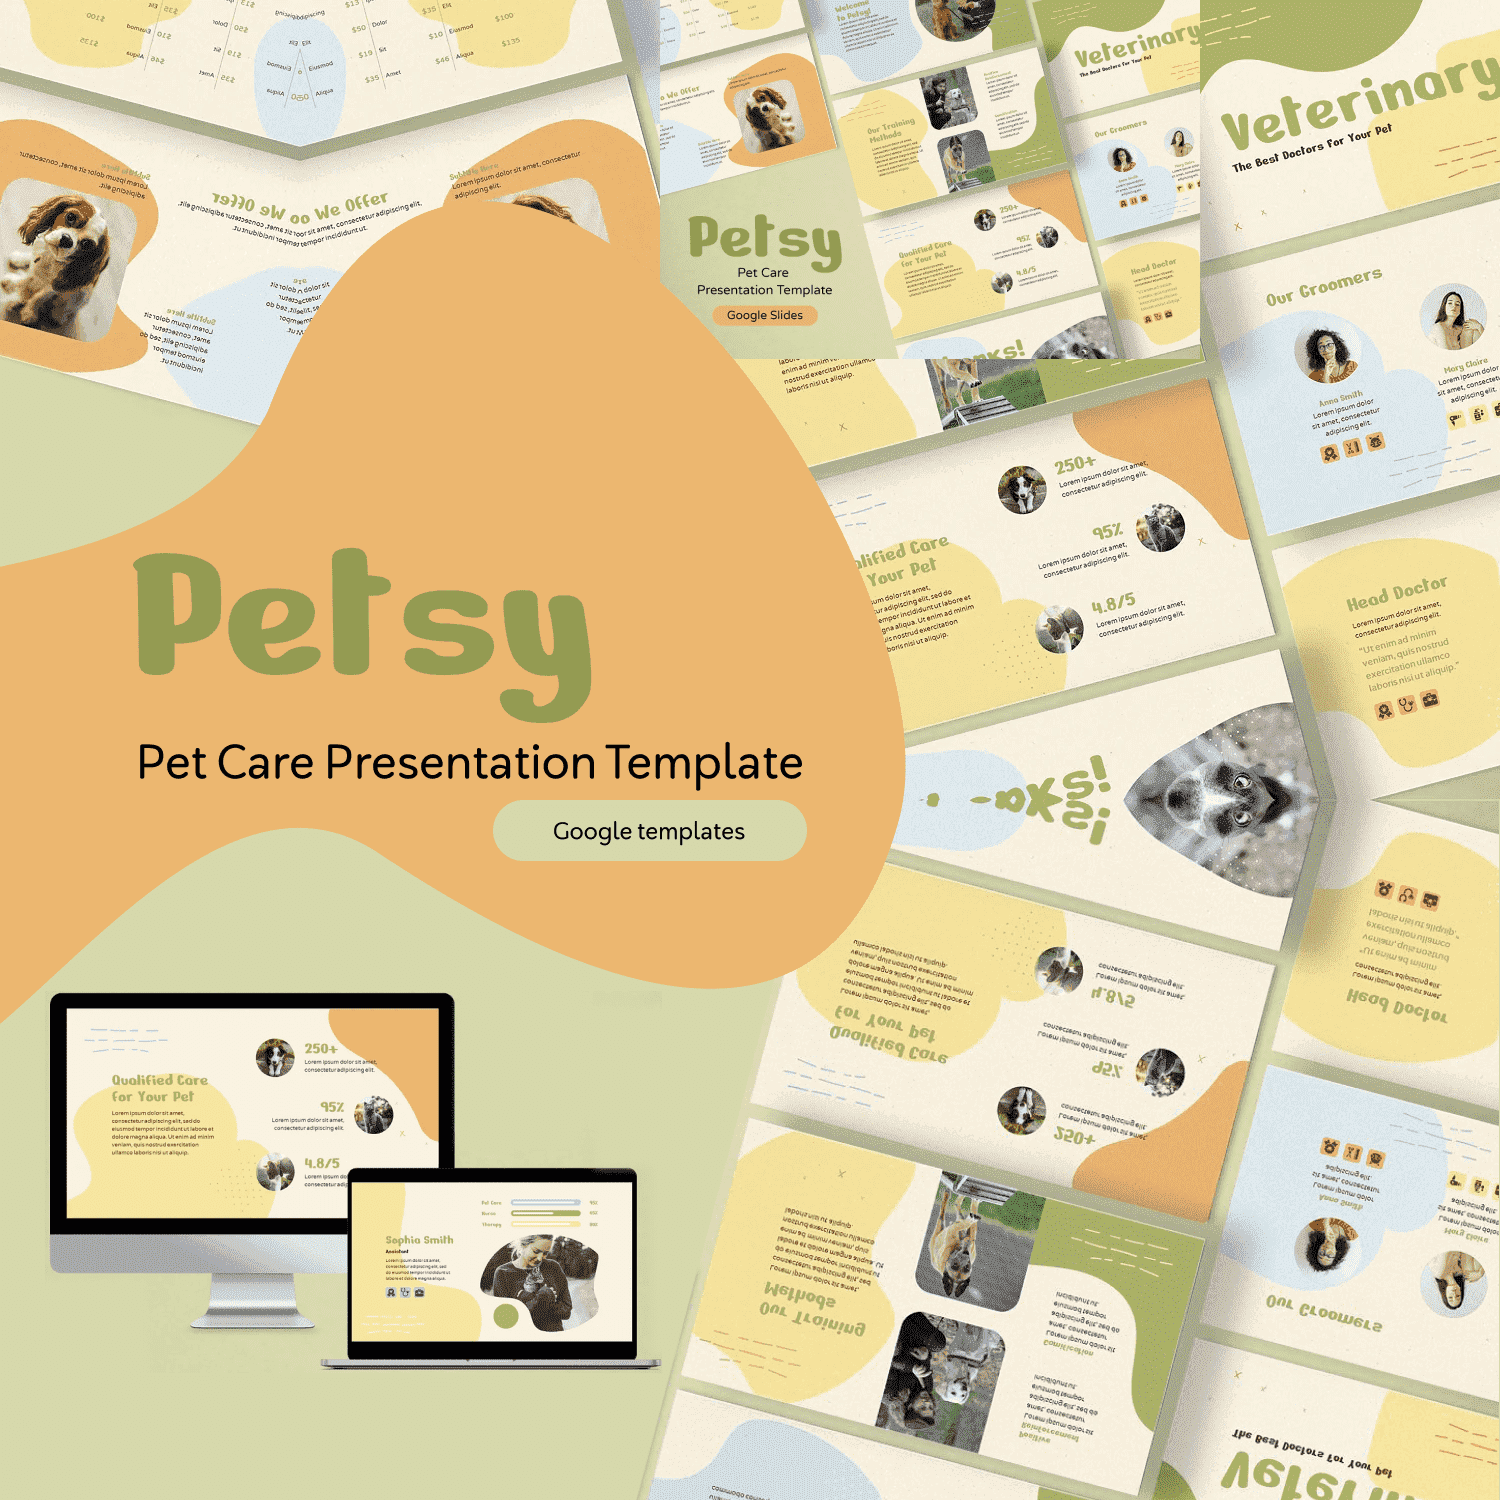 Petsy - Pet Care Presentation - Google Template Preview.